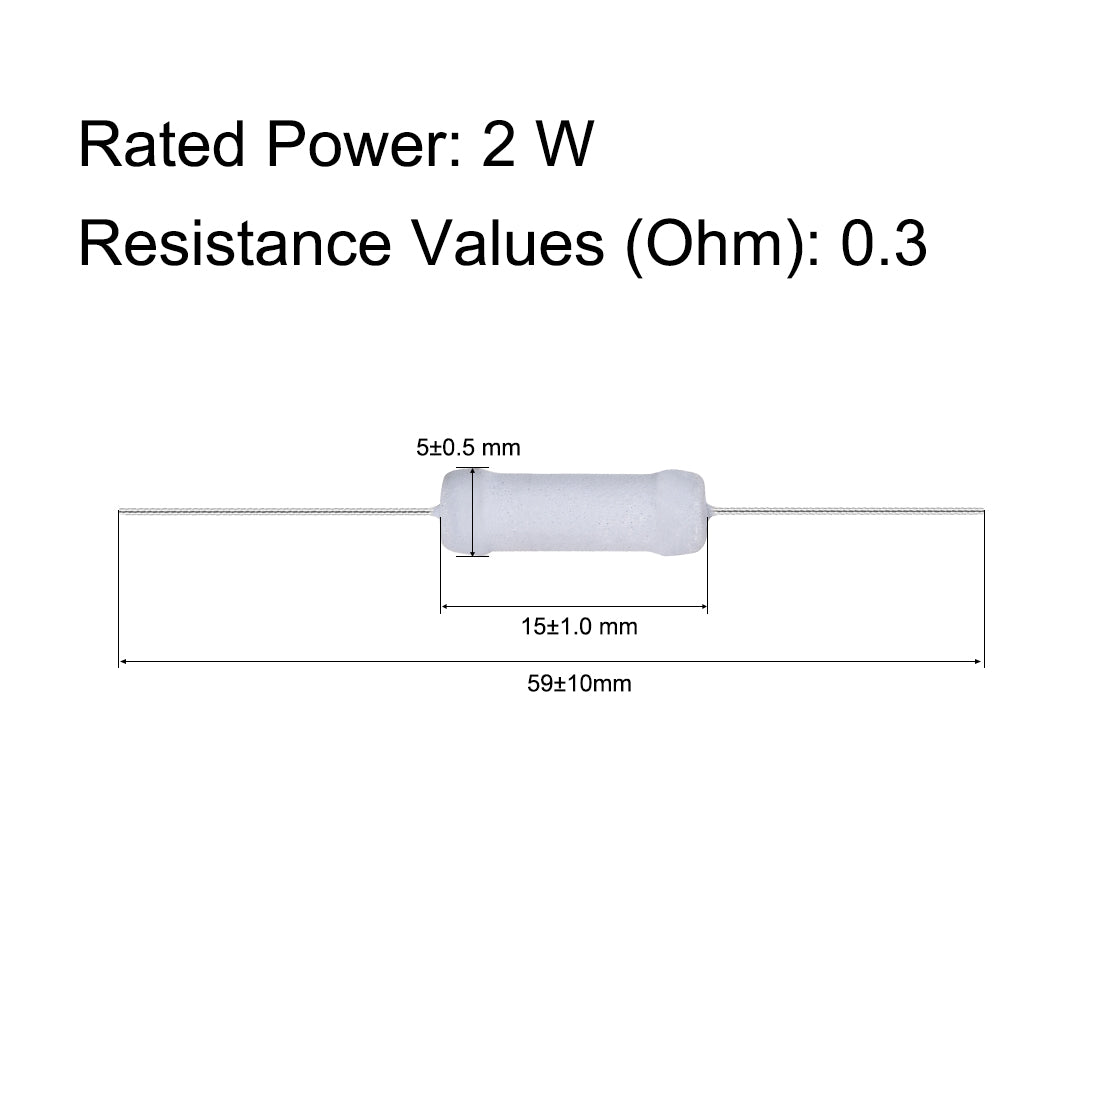 uxcell Uxcell 60pcs 2W 2 Watt Metal Oxide Film Resistor Axile Lead 0.3 Ohm ±5% Tolerance